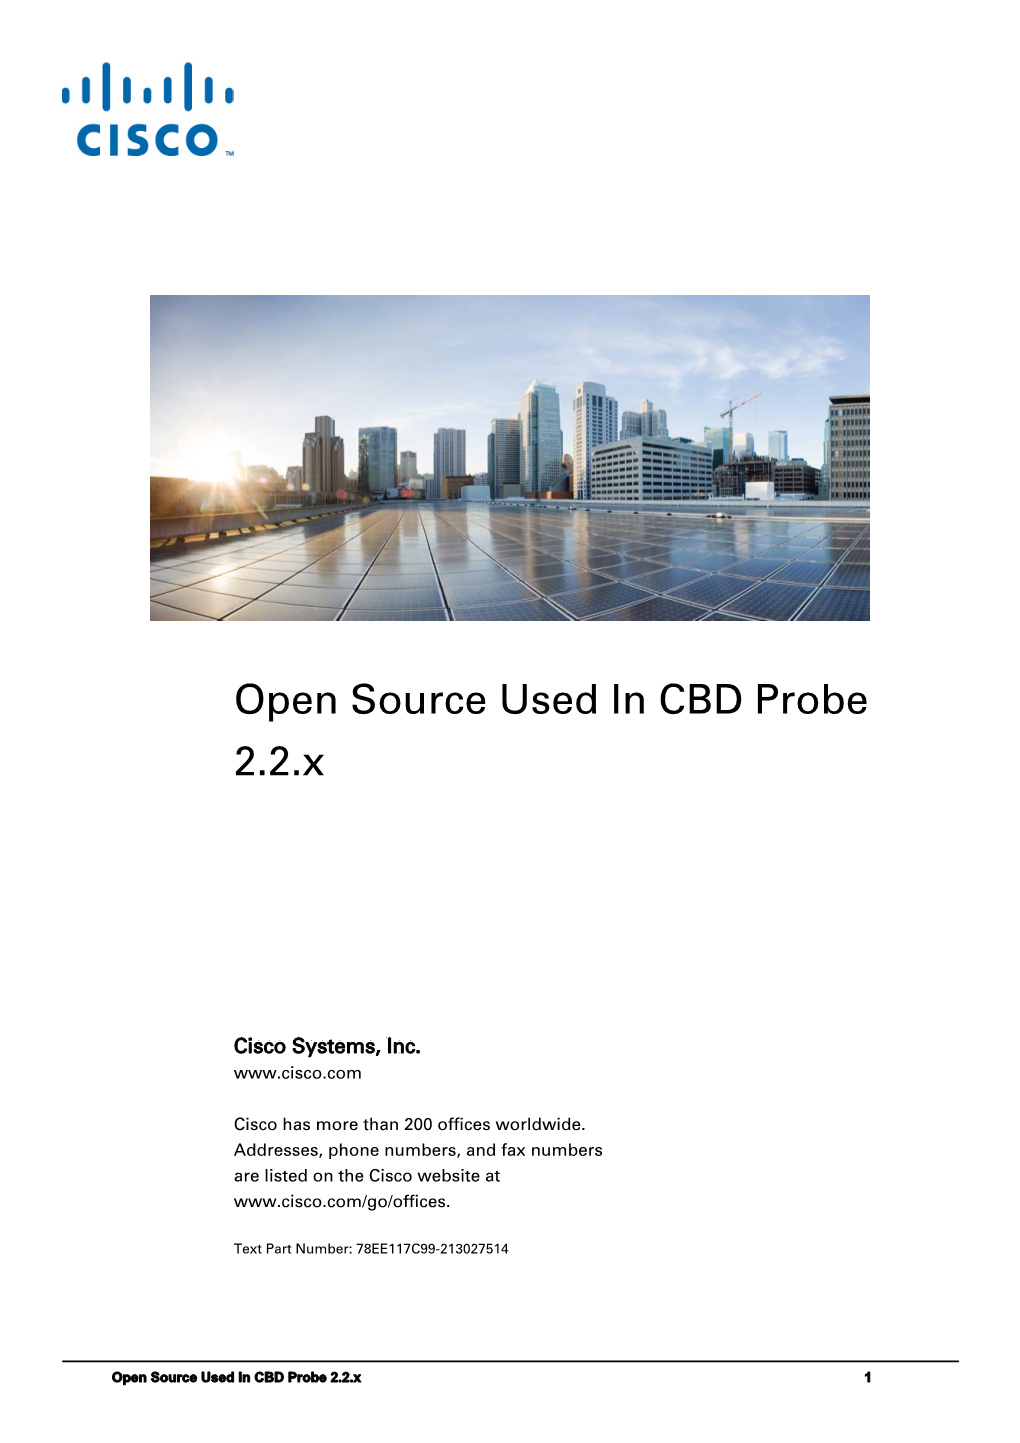 Open Source Used in CBD Probe 2.2.X